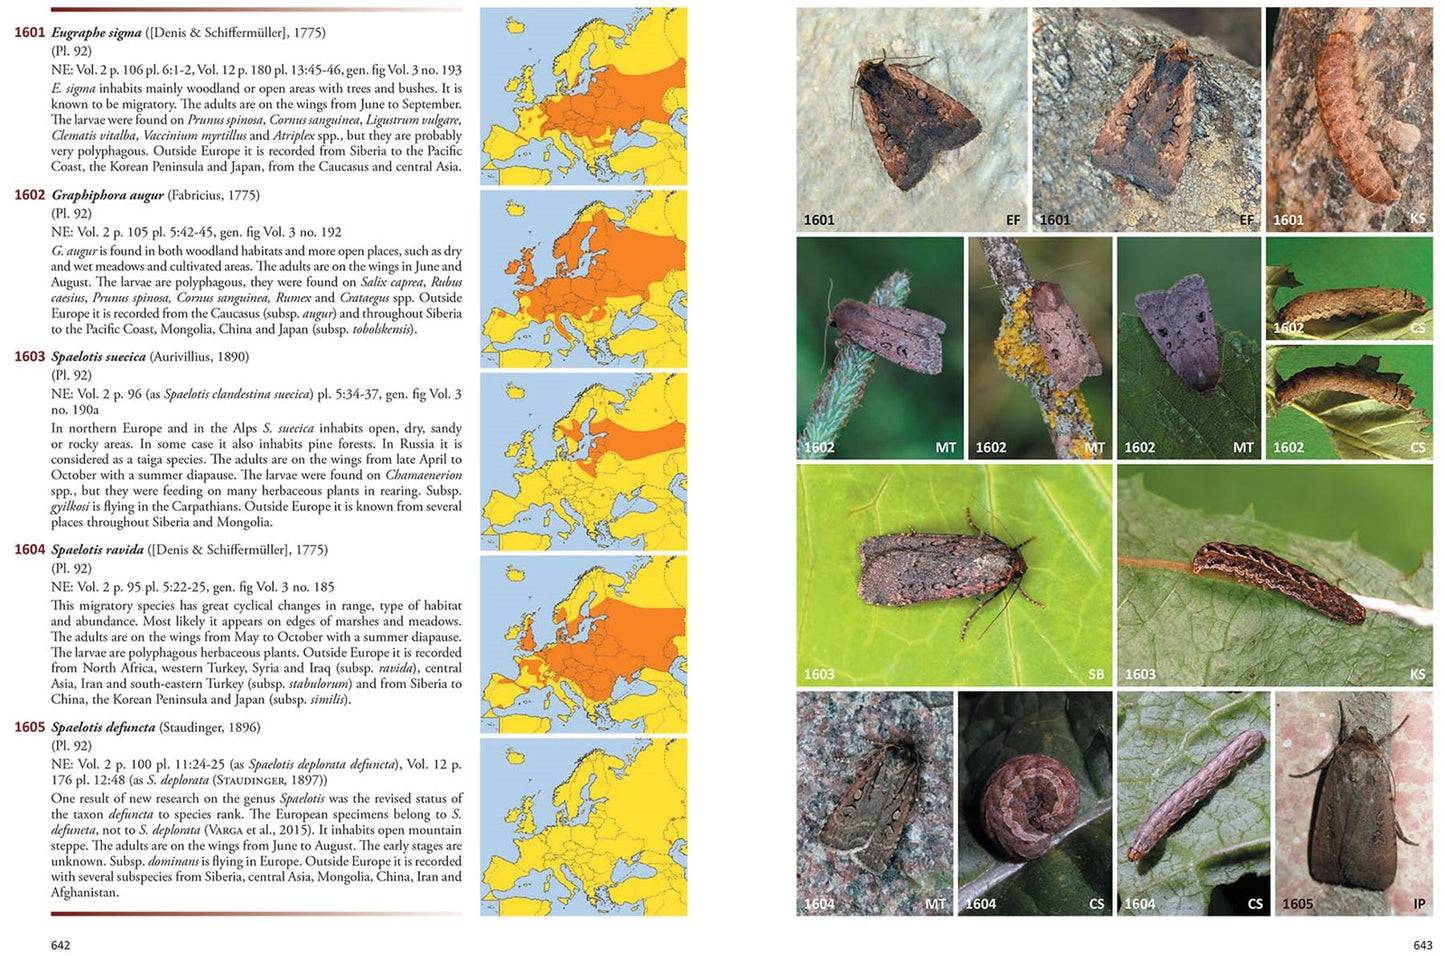 Noctuidae Europaeae Essential ·· Komplet værk over europæiske ugler